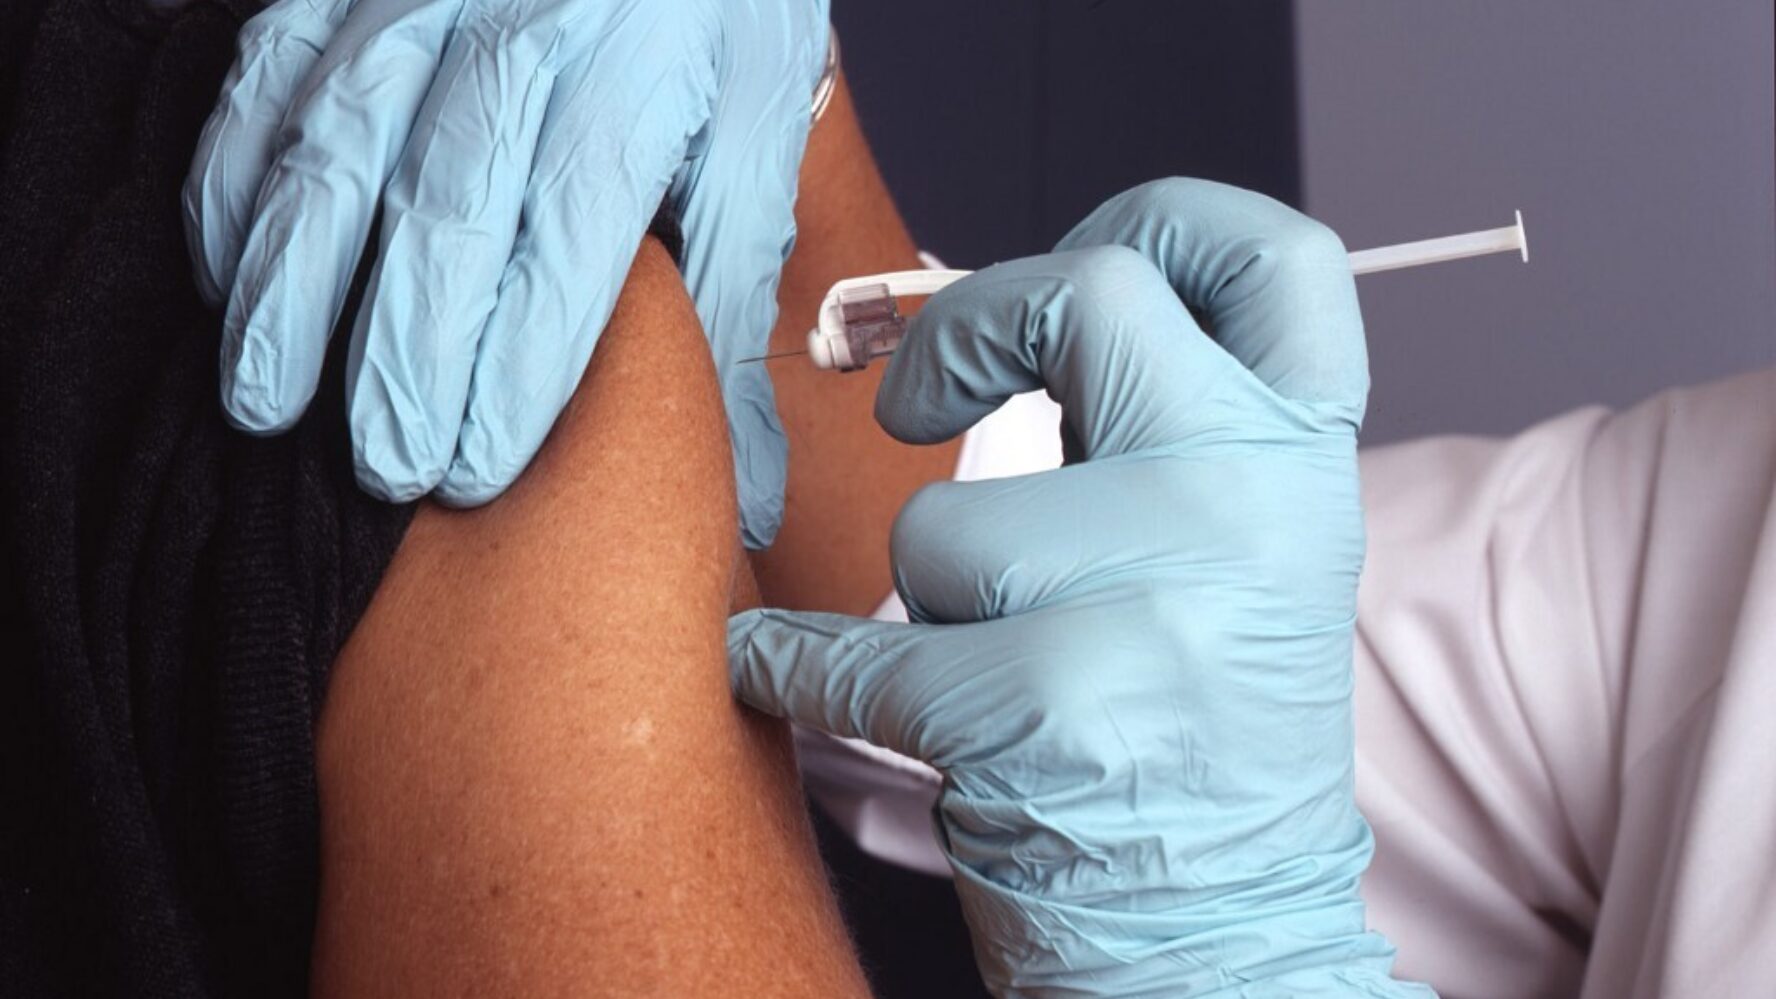 A person receiving a vaccine